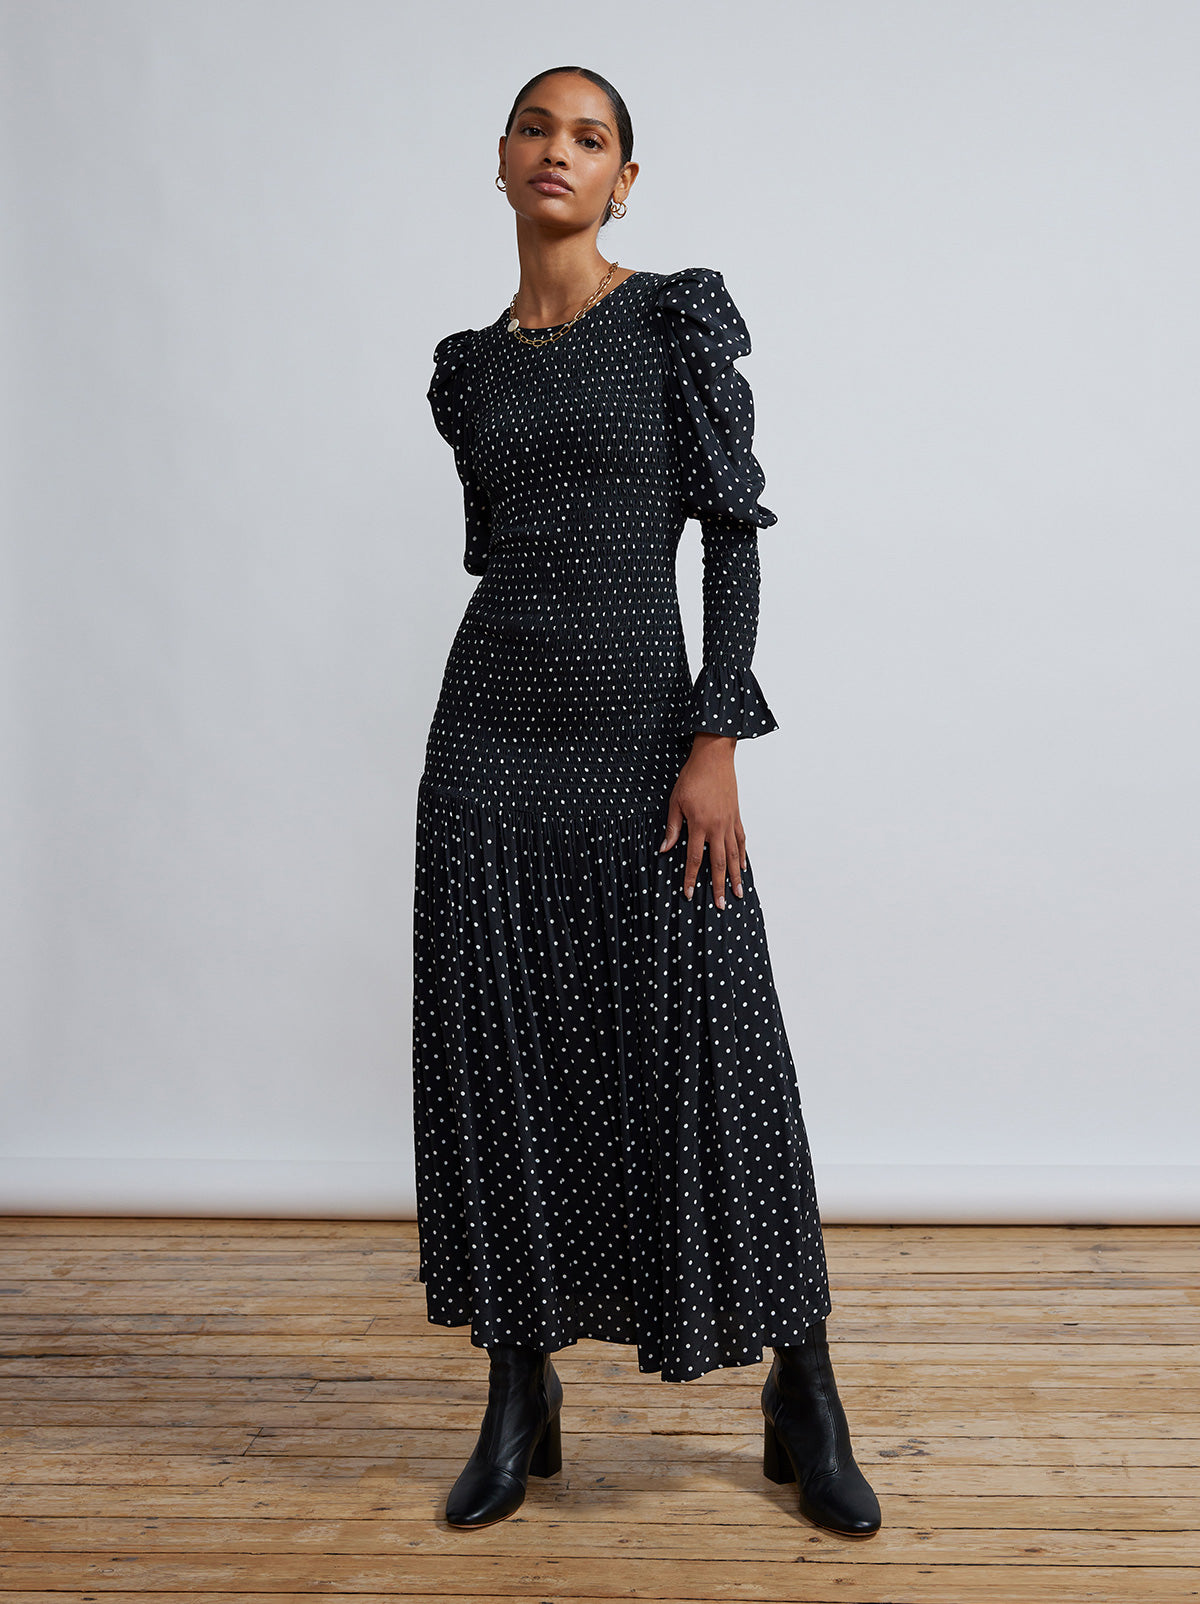 Wren Black Polka Dot Shirred Dress by KITRI Studio